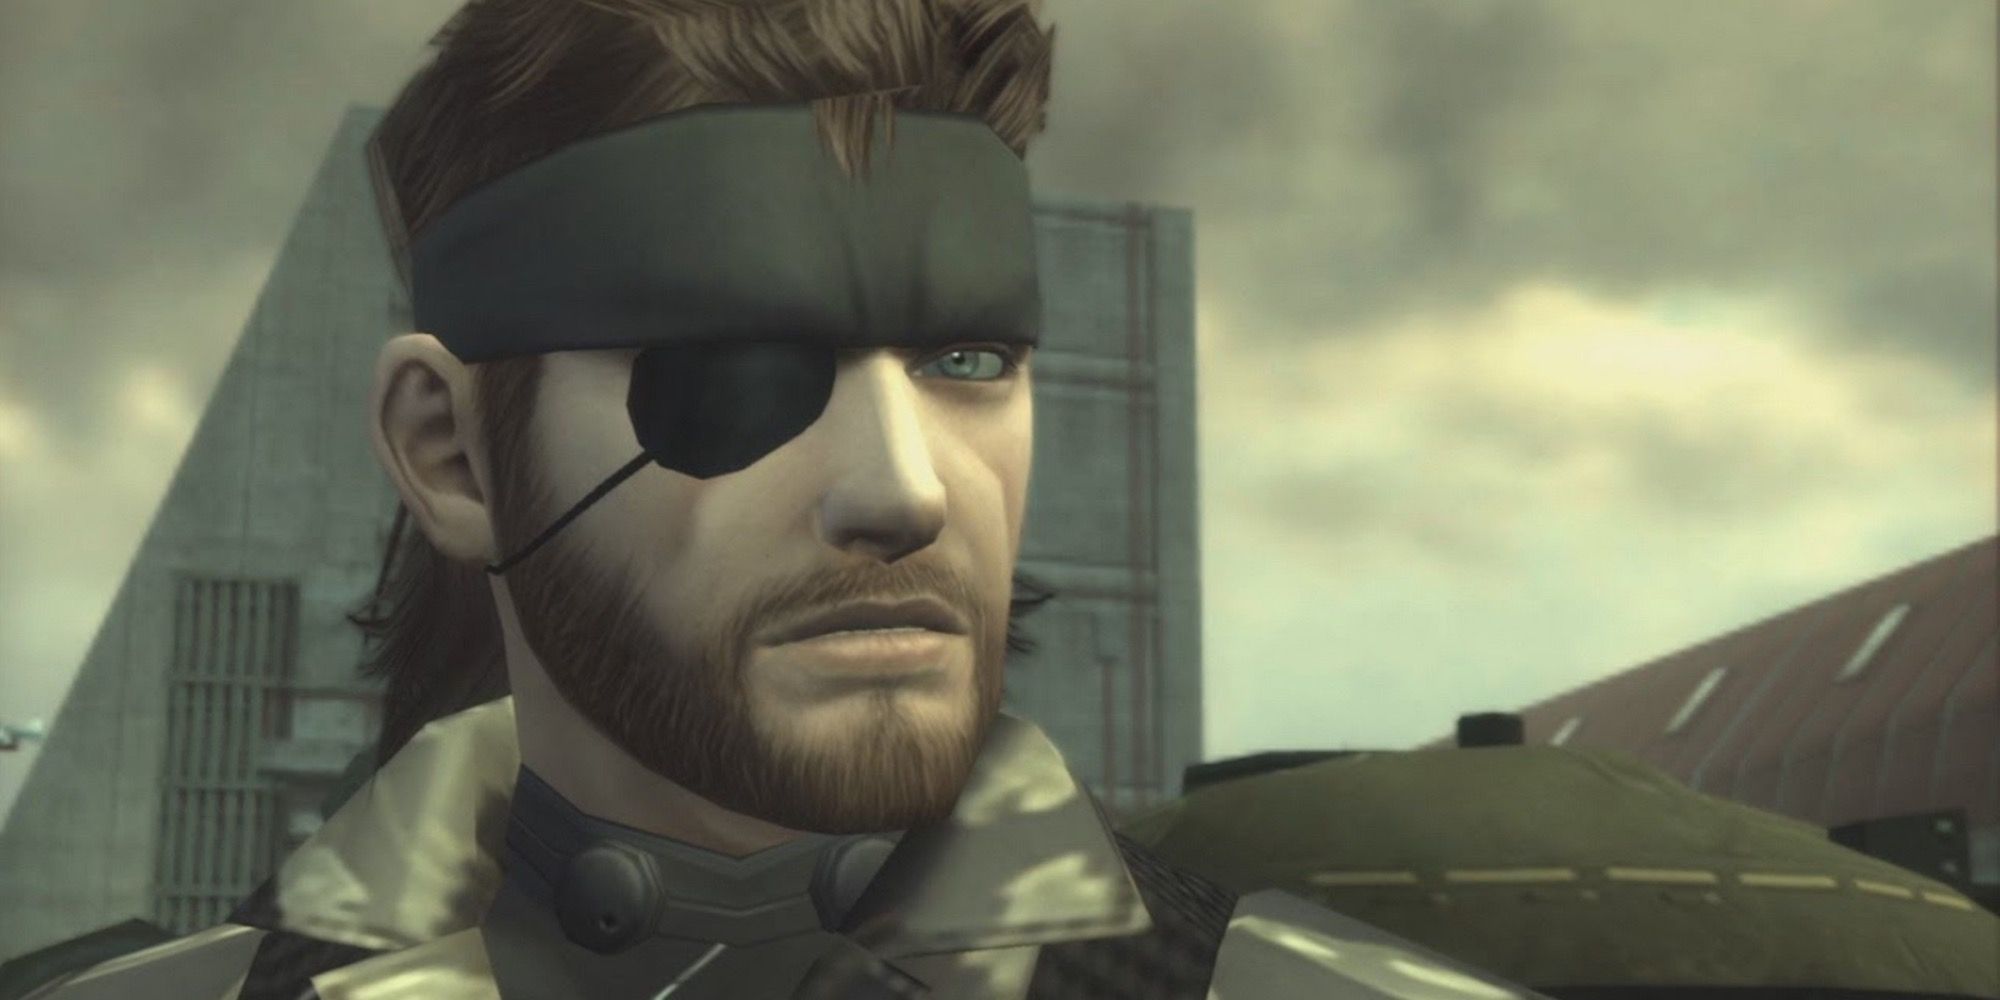 Big Boss in Metal Gear Solid 3